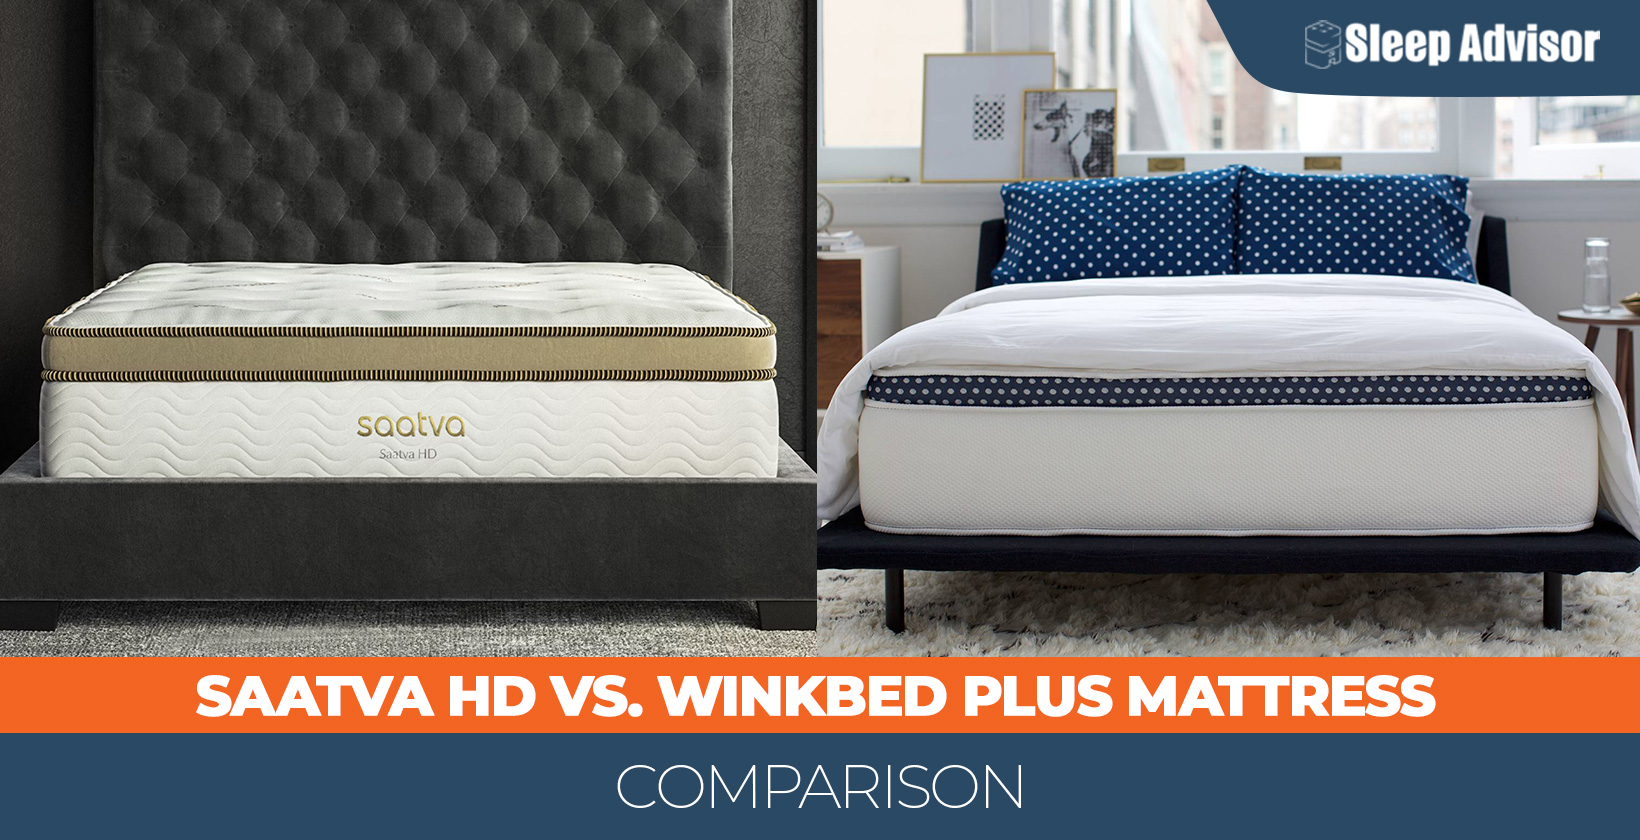 Our comparison for Saatva HD versus Winkbed Plus mattress